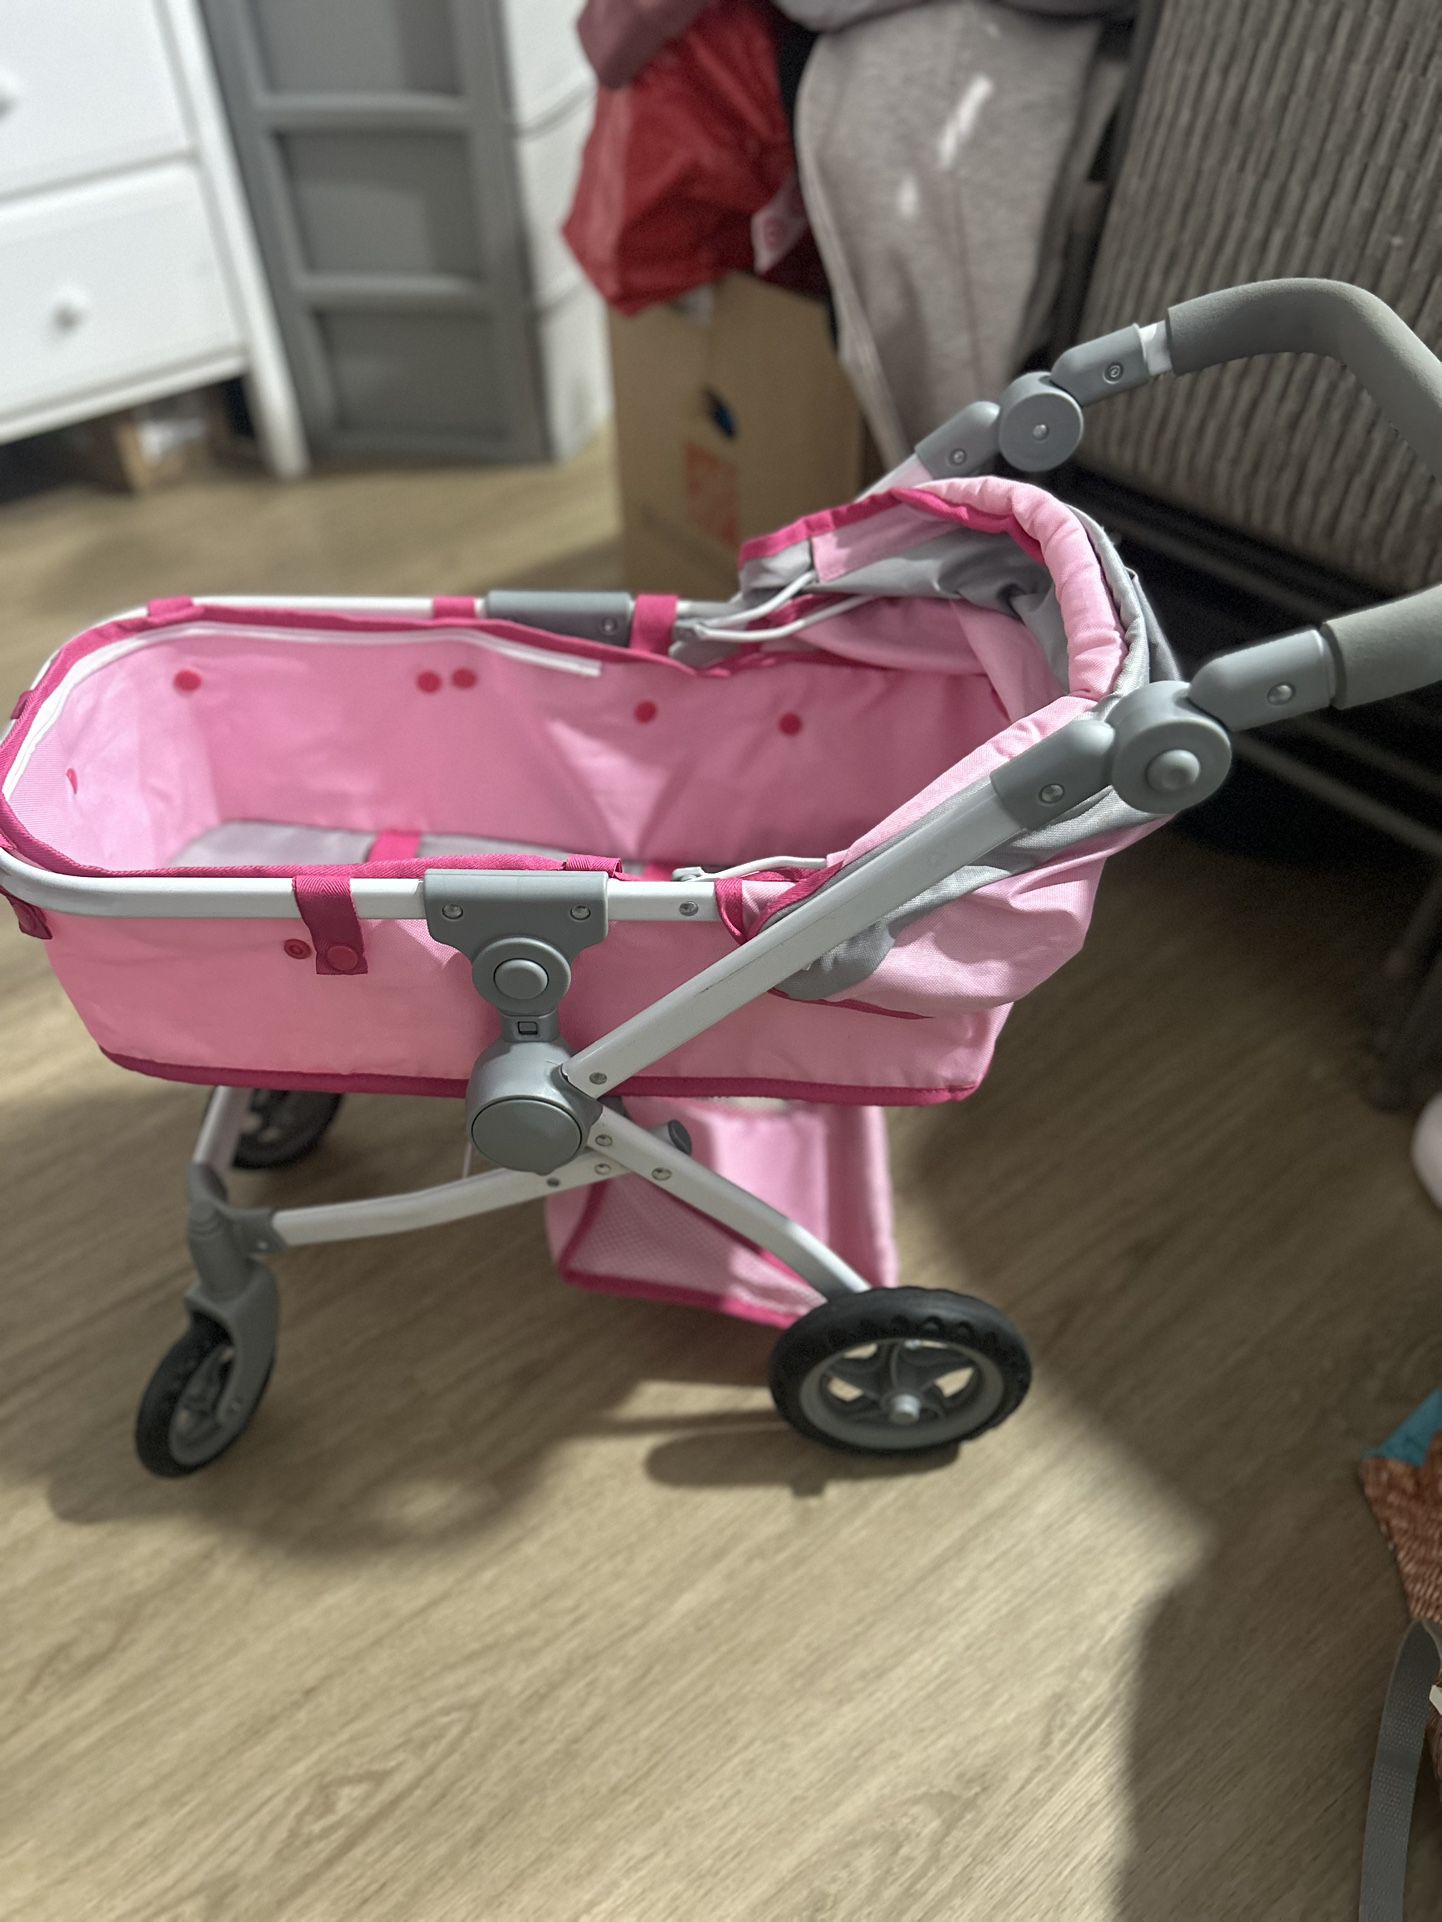 Baby Toy Stroller